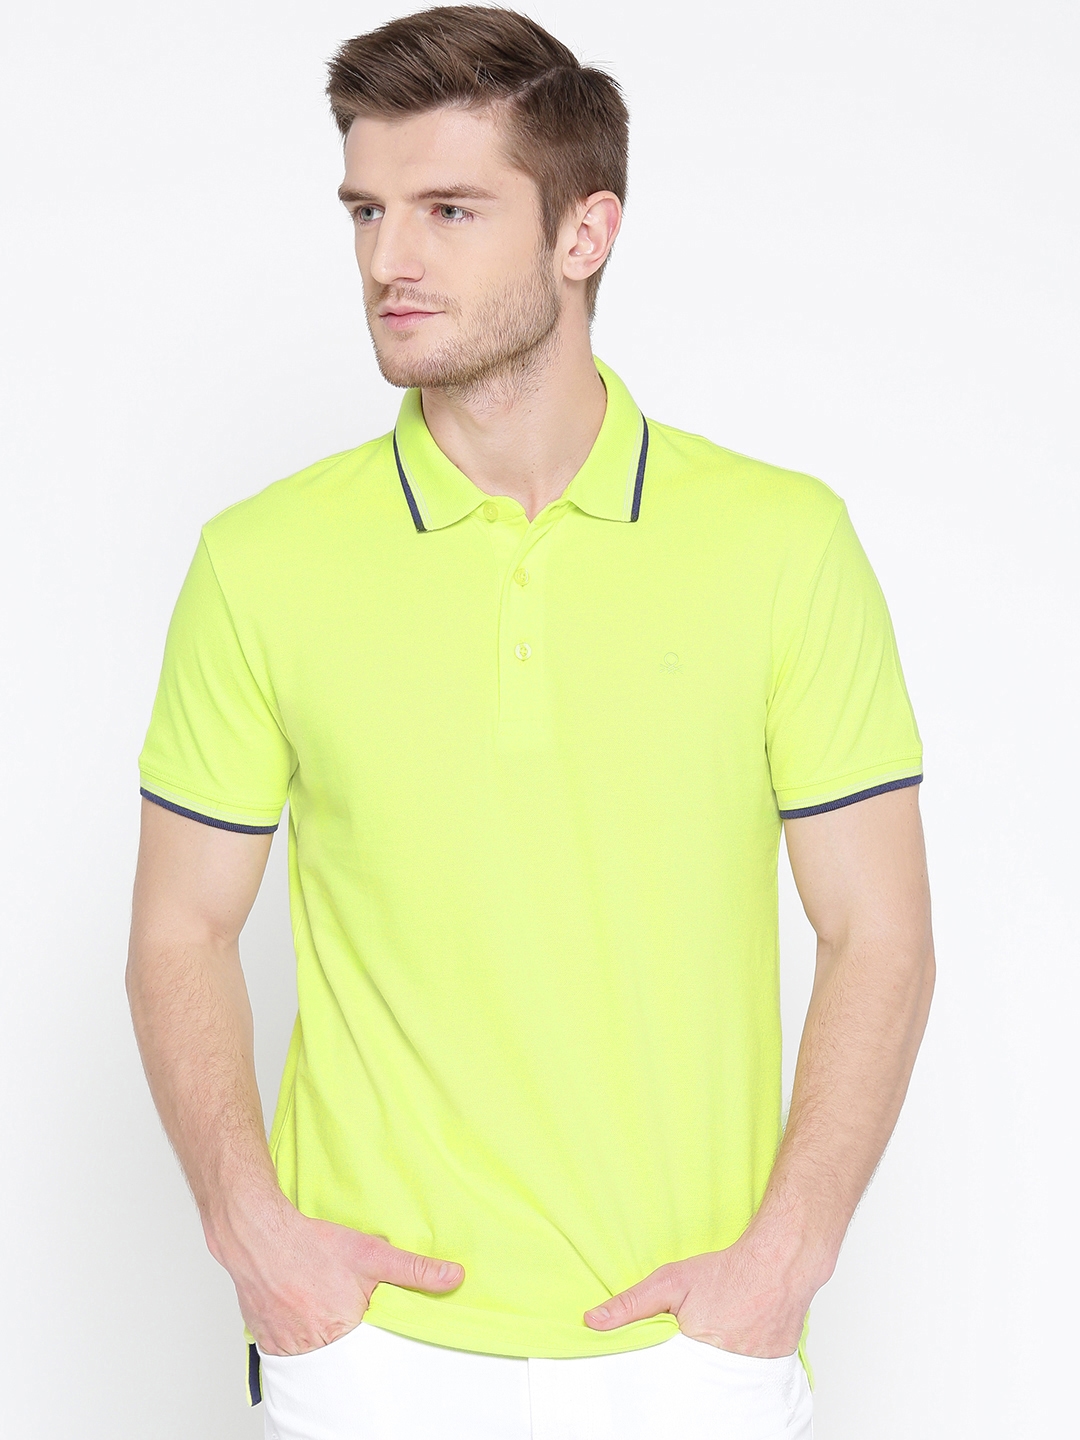 polo t shirt colours